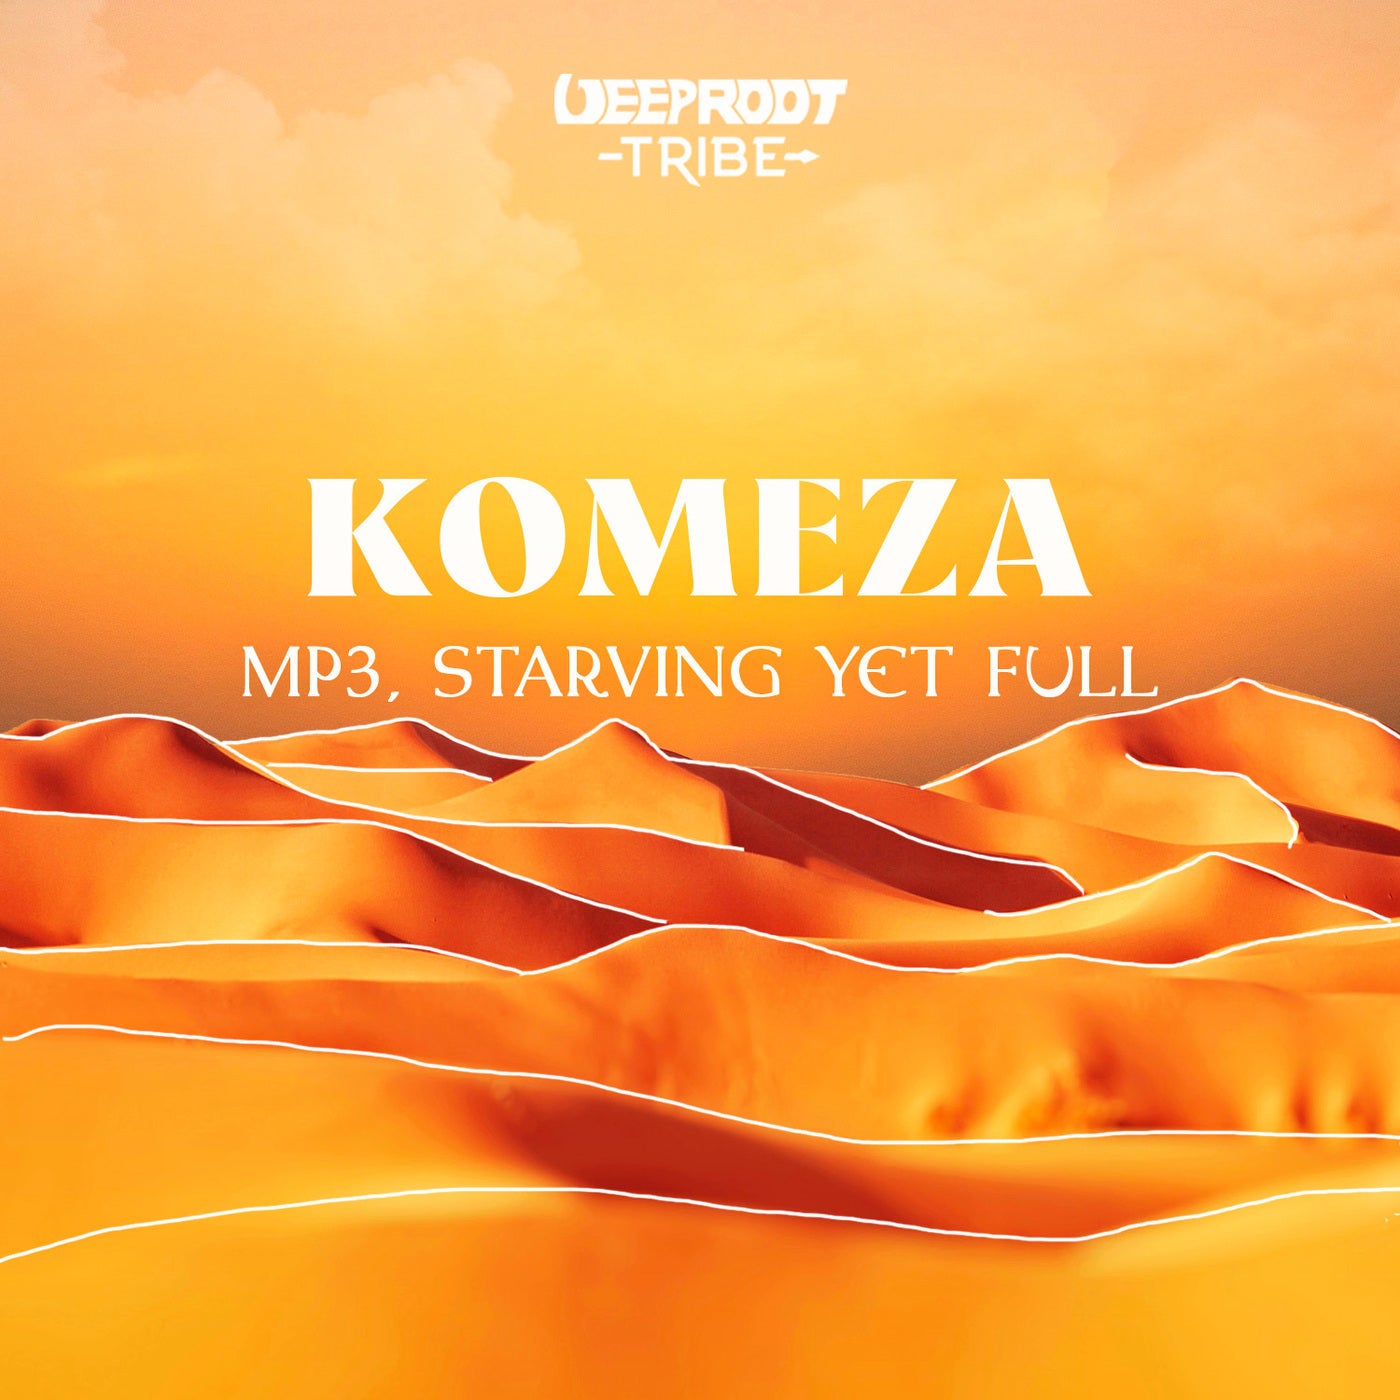 Starving Yet Full & MP3 (DE) - Komeza on Deep Root Tribe